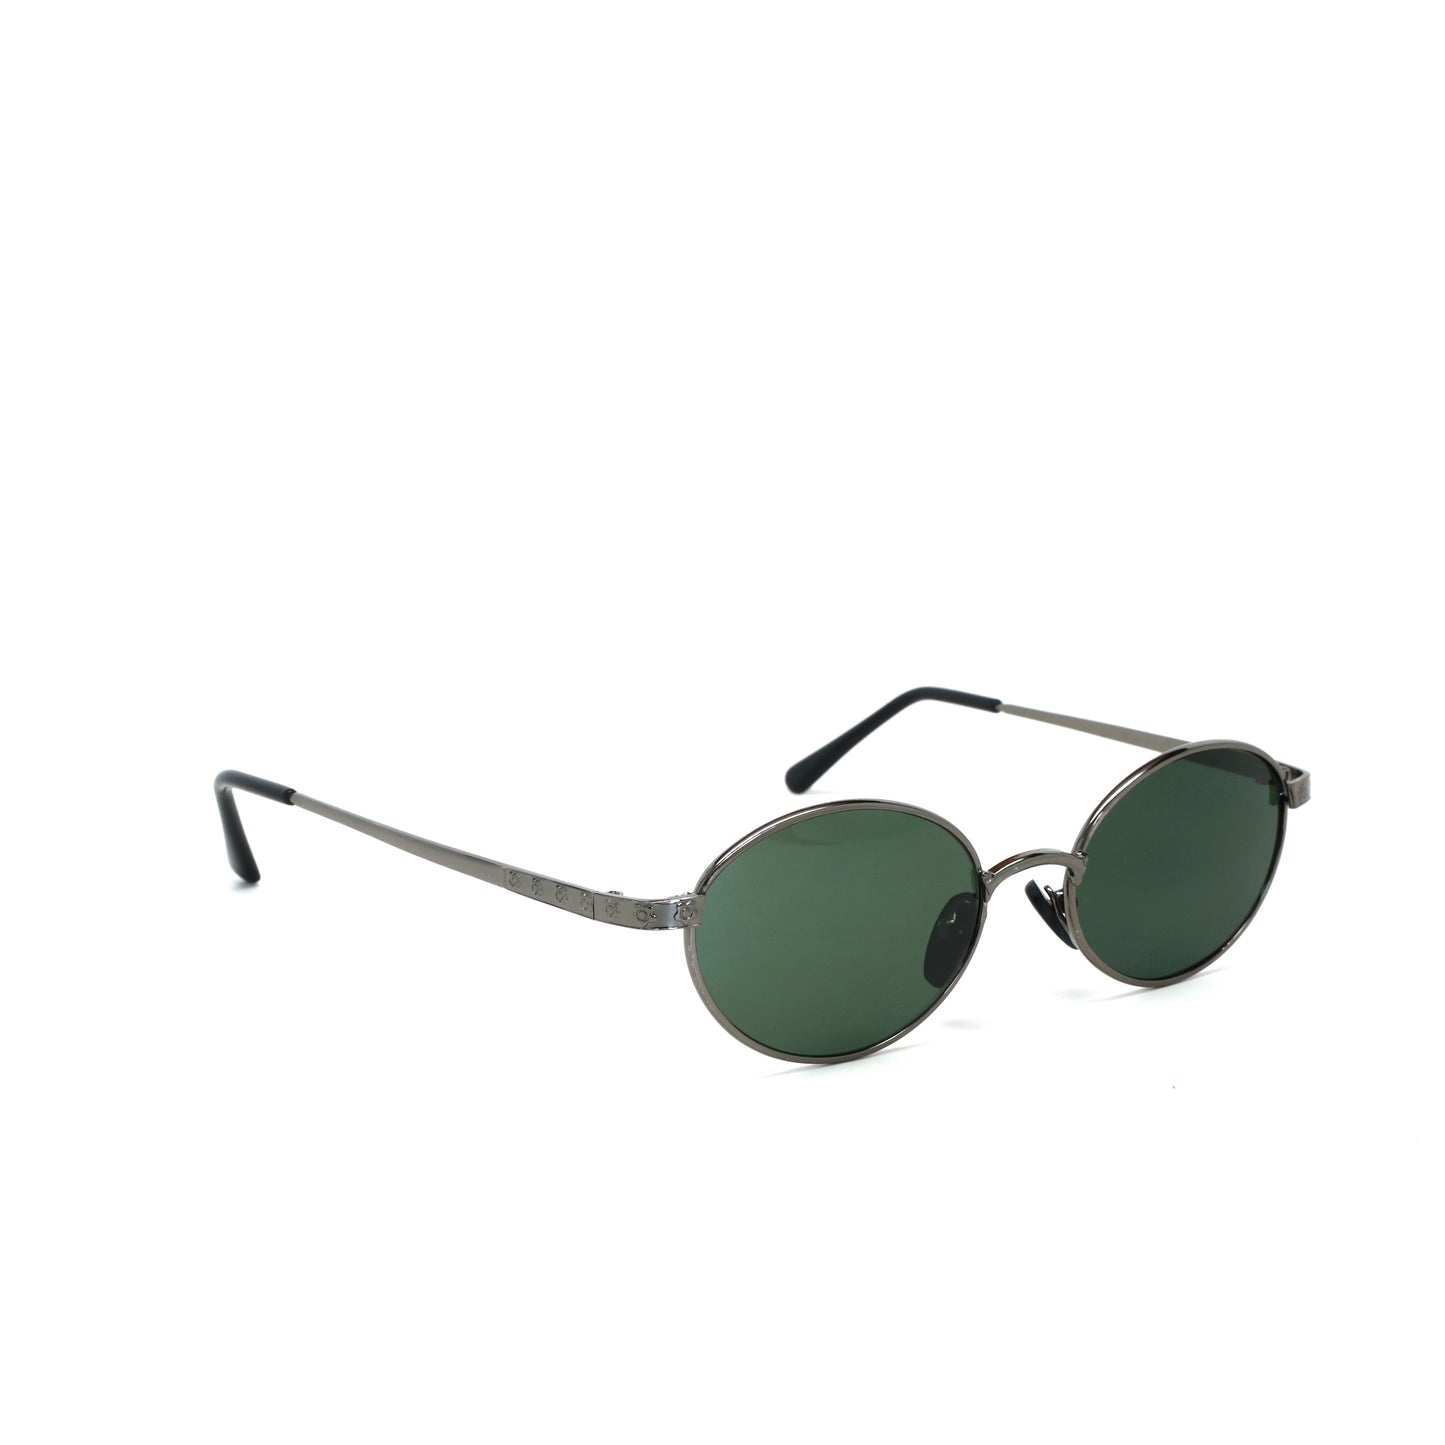 Vintage MINI Small Size 1996 Neo Standard Oval Frame Sunglasses - Grey